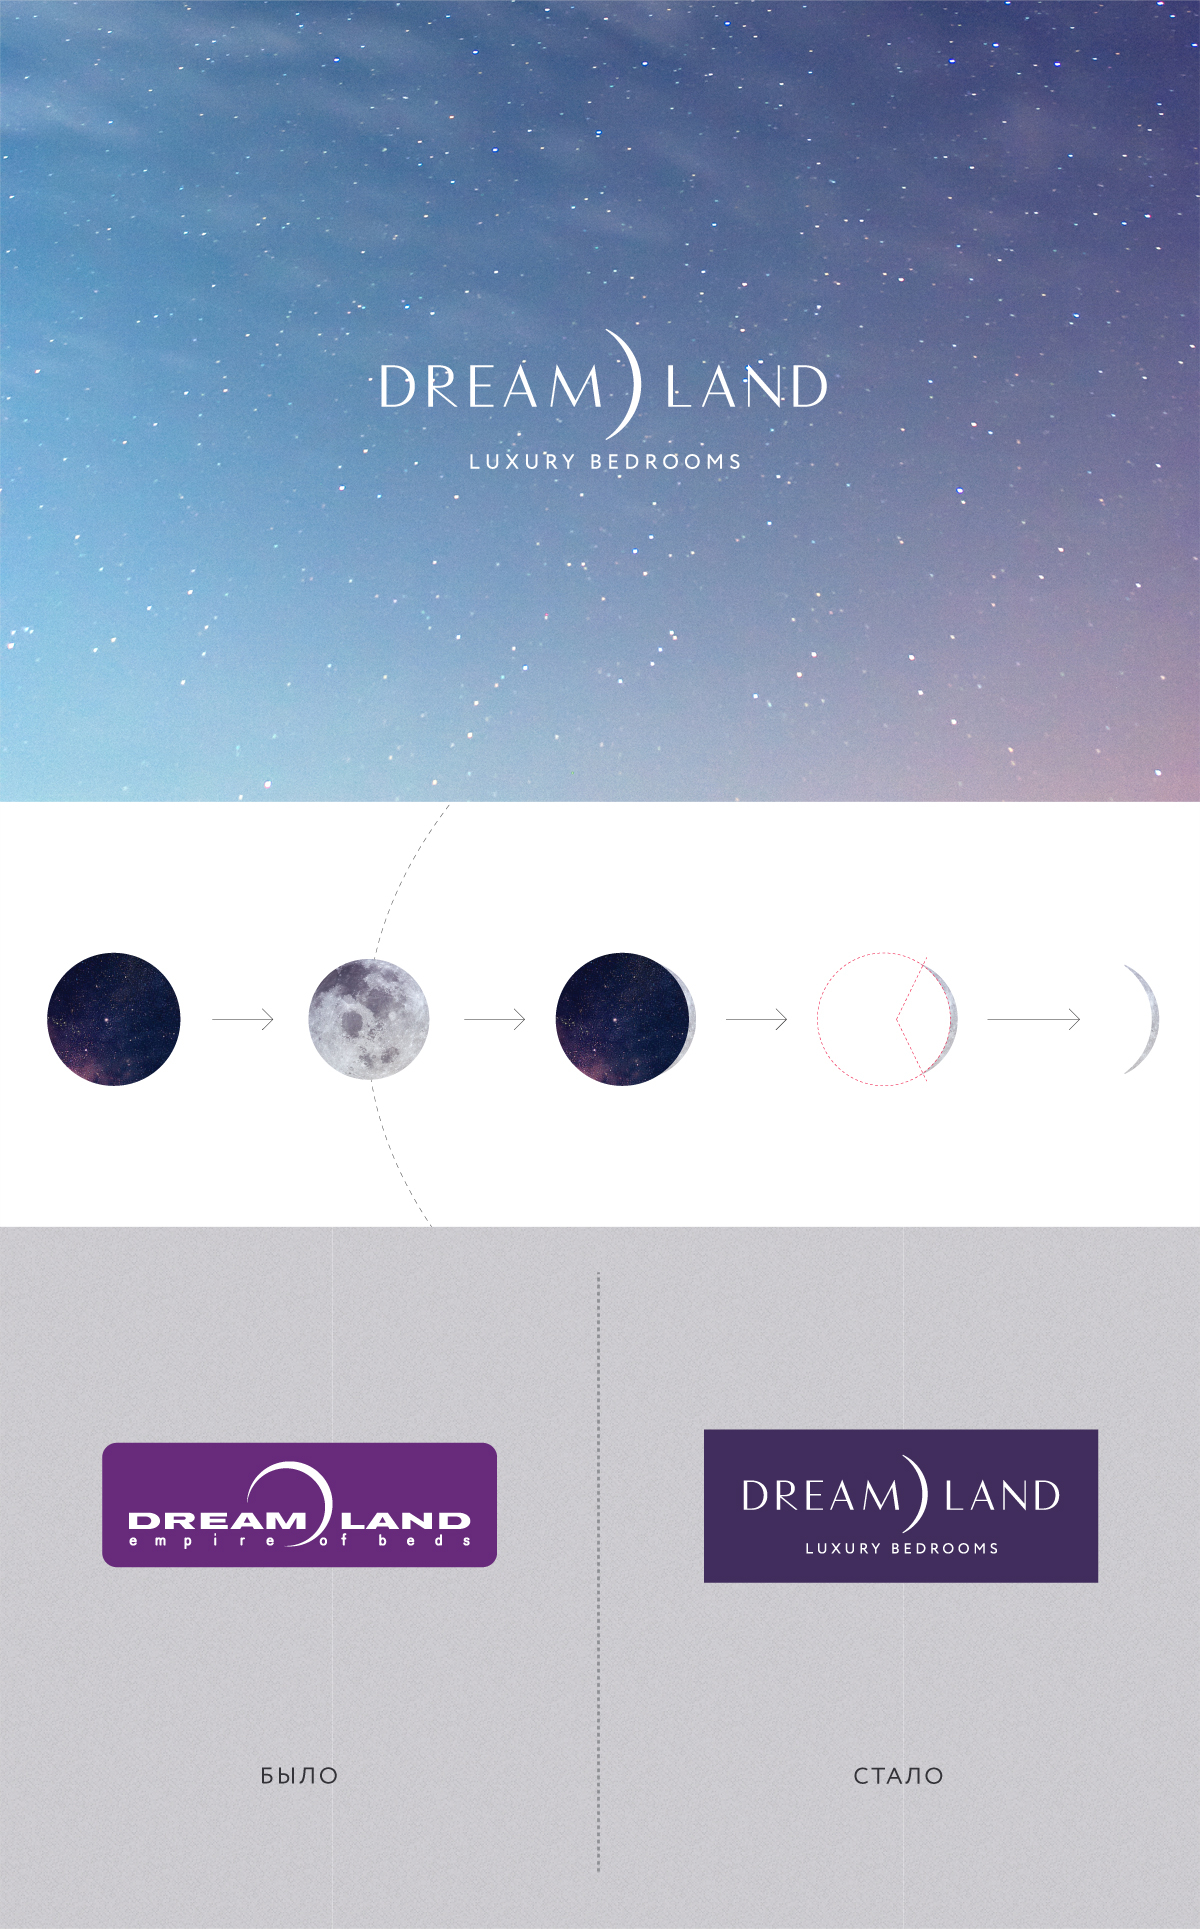 Эволюция дизайна логотипа бренда Dream Land